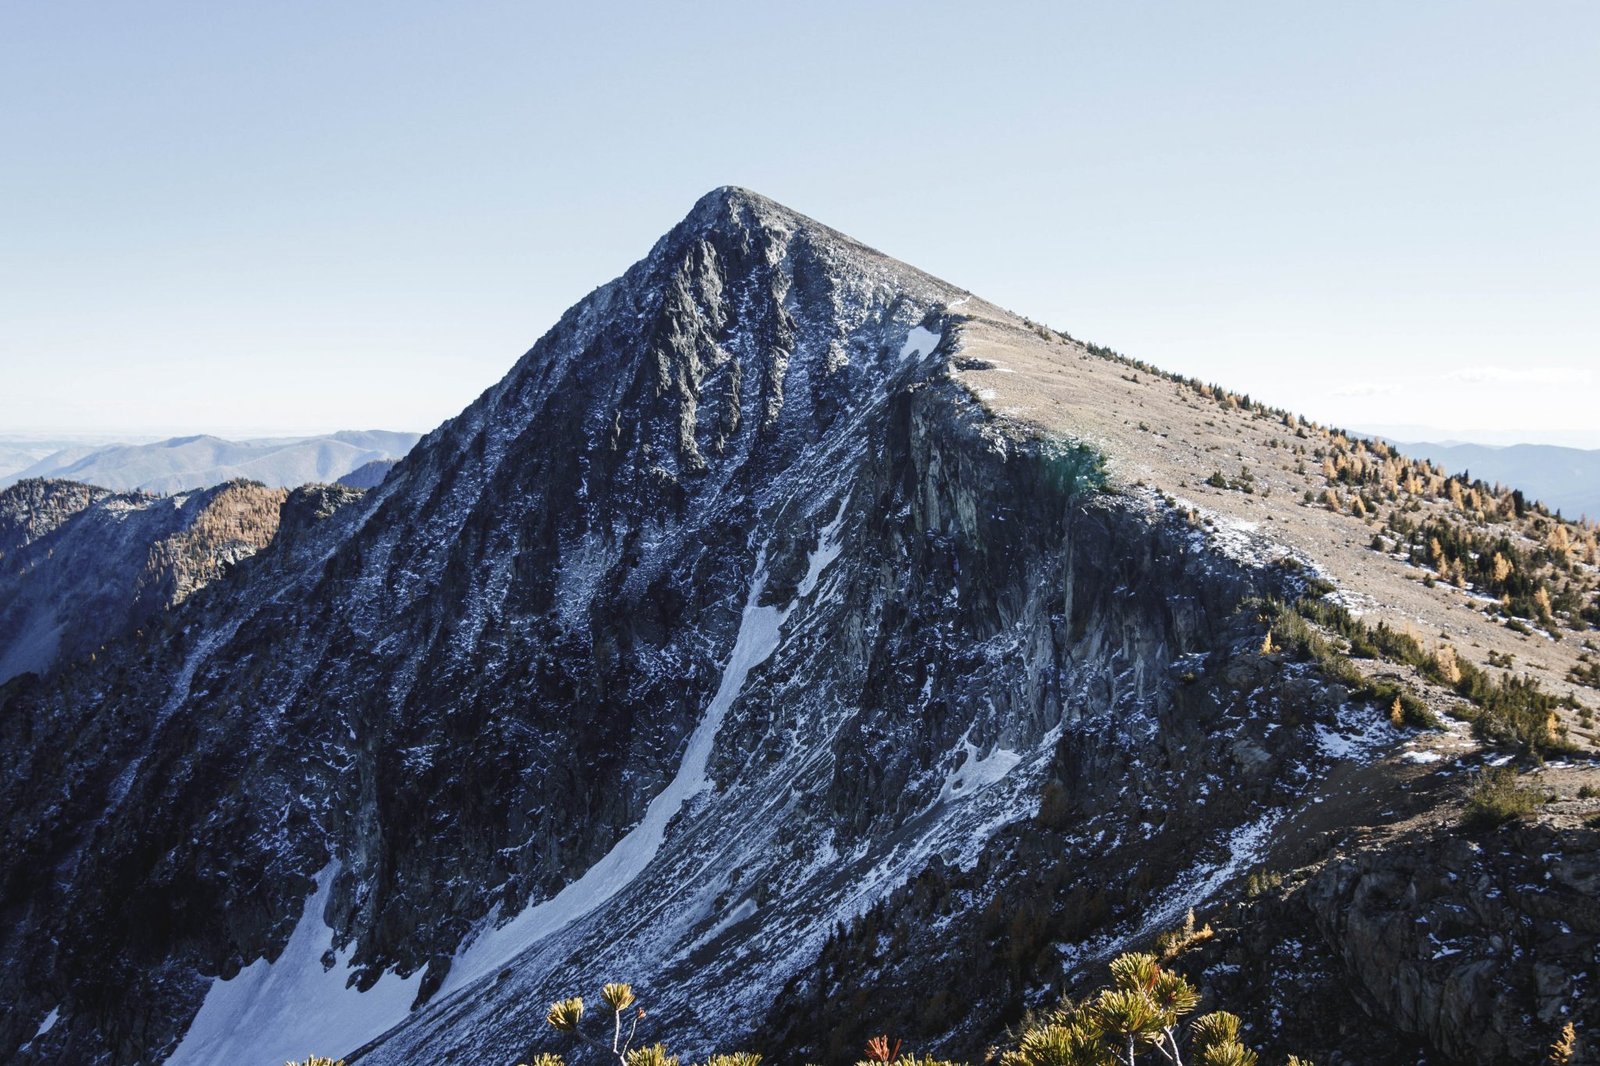 Pyramid Mountain's impressive north face